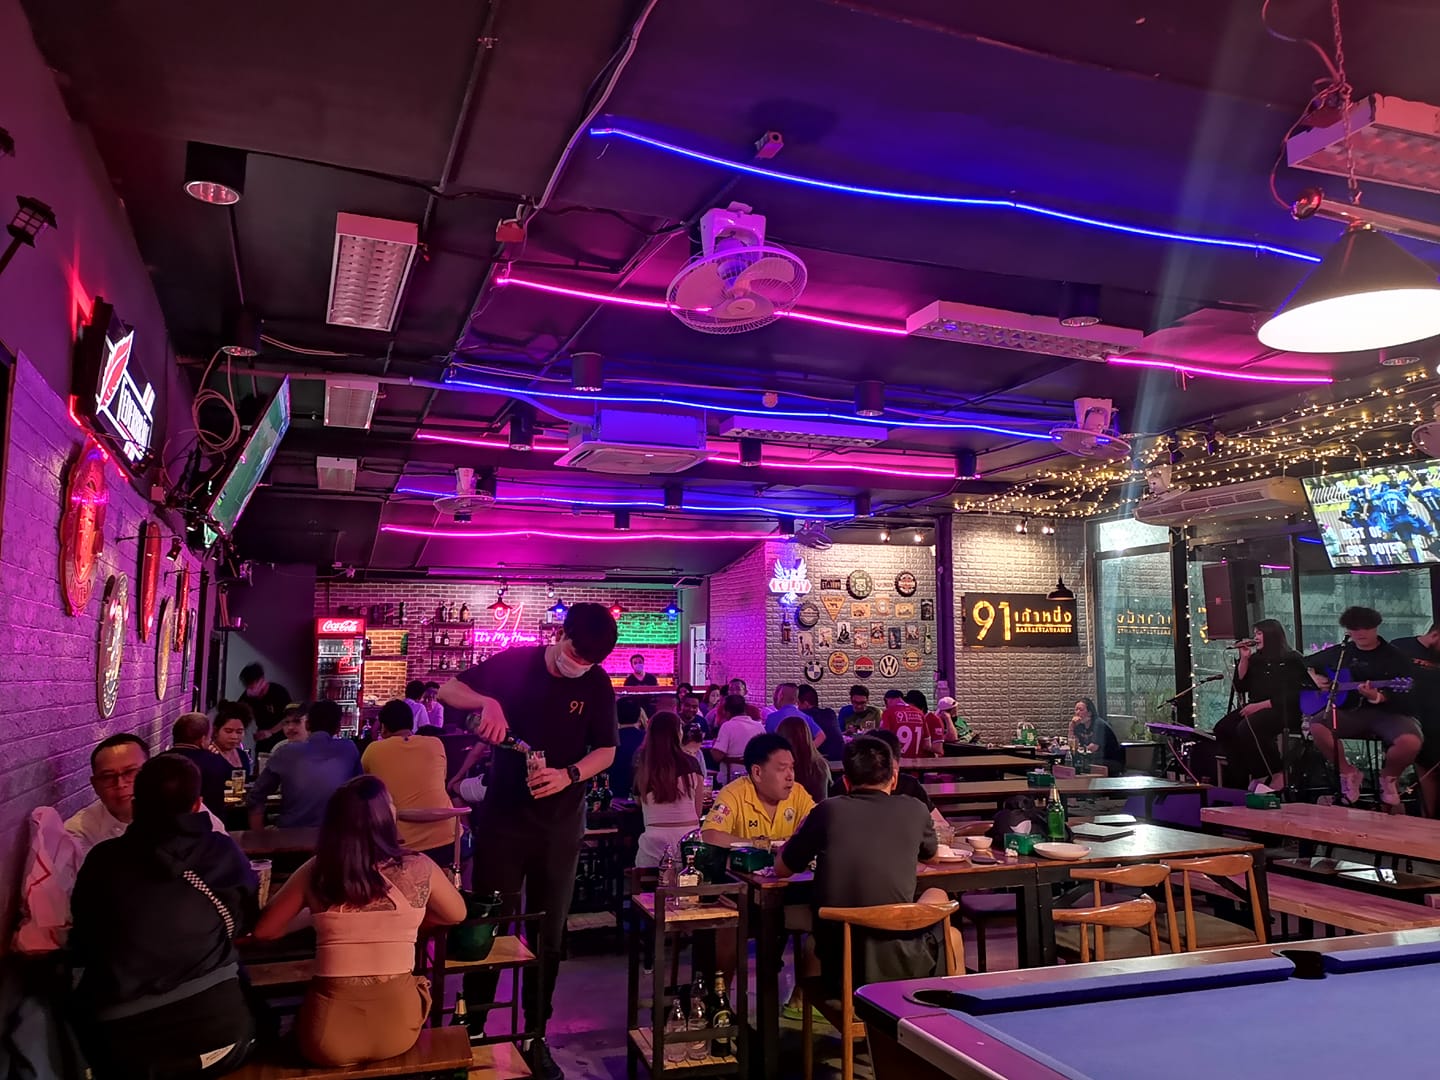 91 Bar & Restaurants (91 Bar & Restaurants) : กรุงเทพมหานคร (Bangkok)